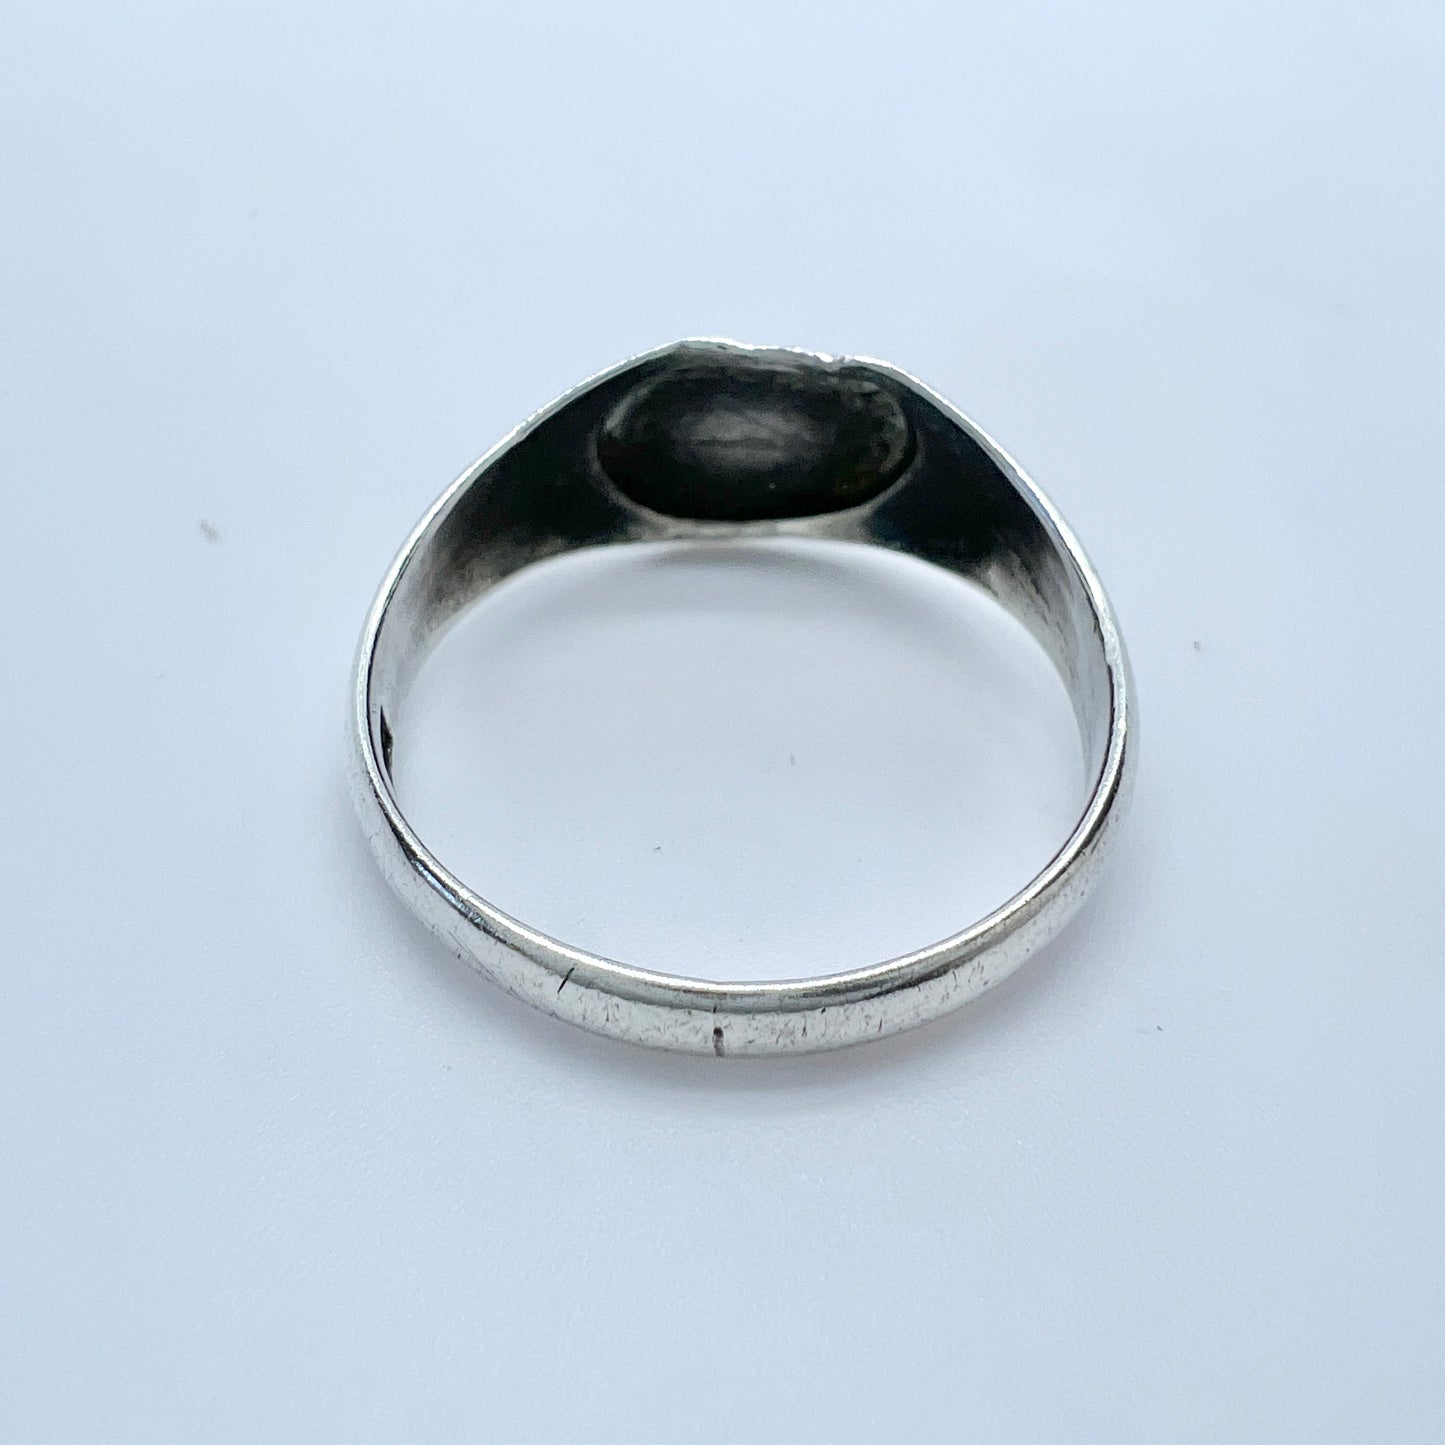 Bernhard Hertz, Sweden 1907. Antique Solid Silver Memory Ring.